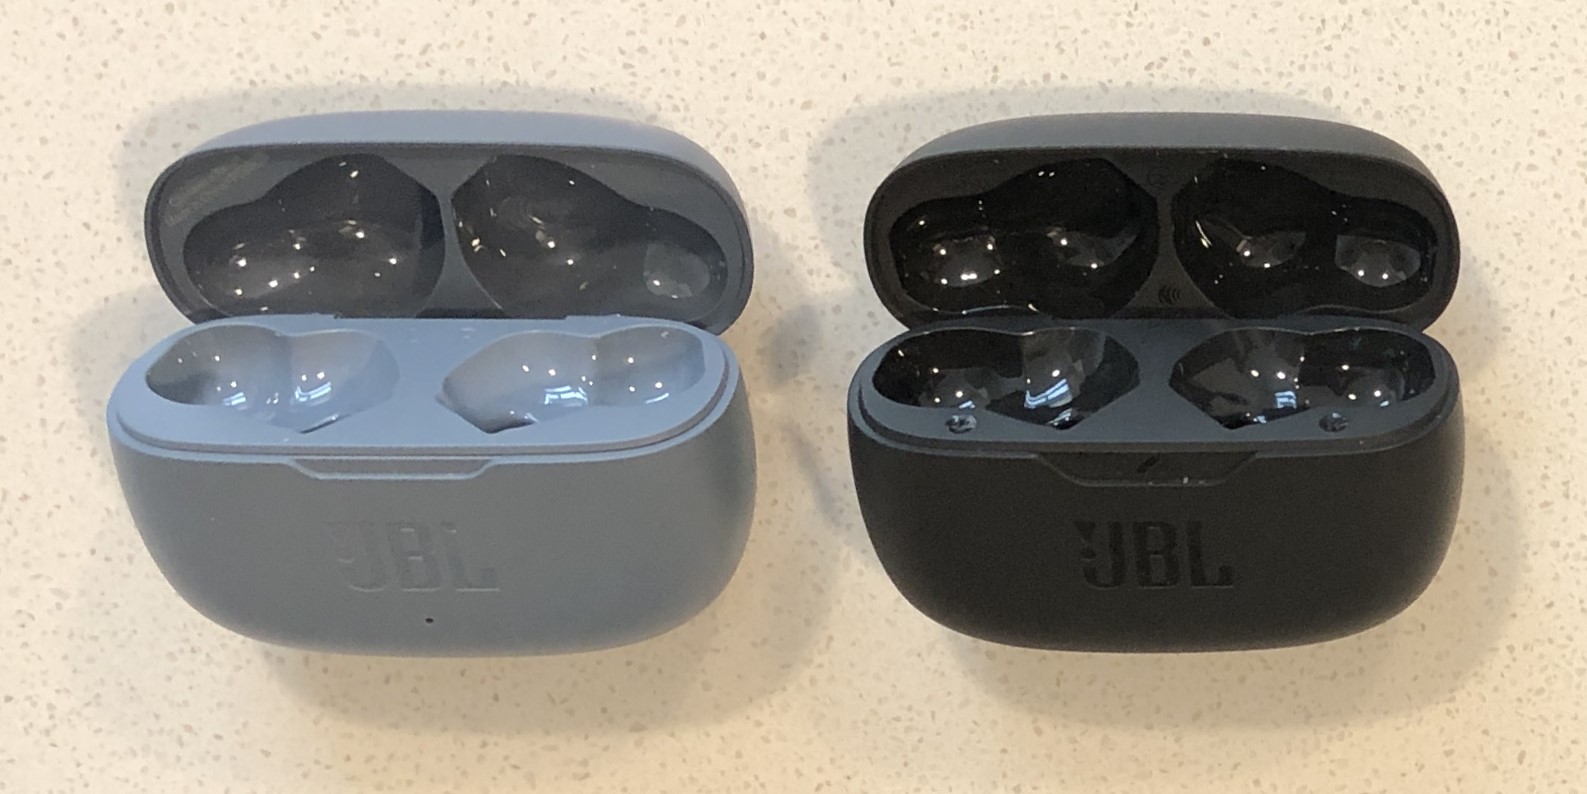 JBL Vibe 200TWS vs Vibe Beam charging case inside